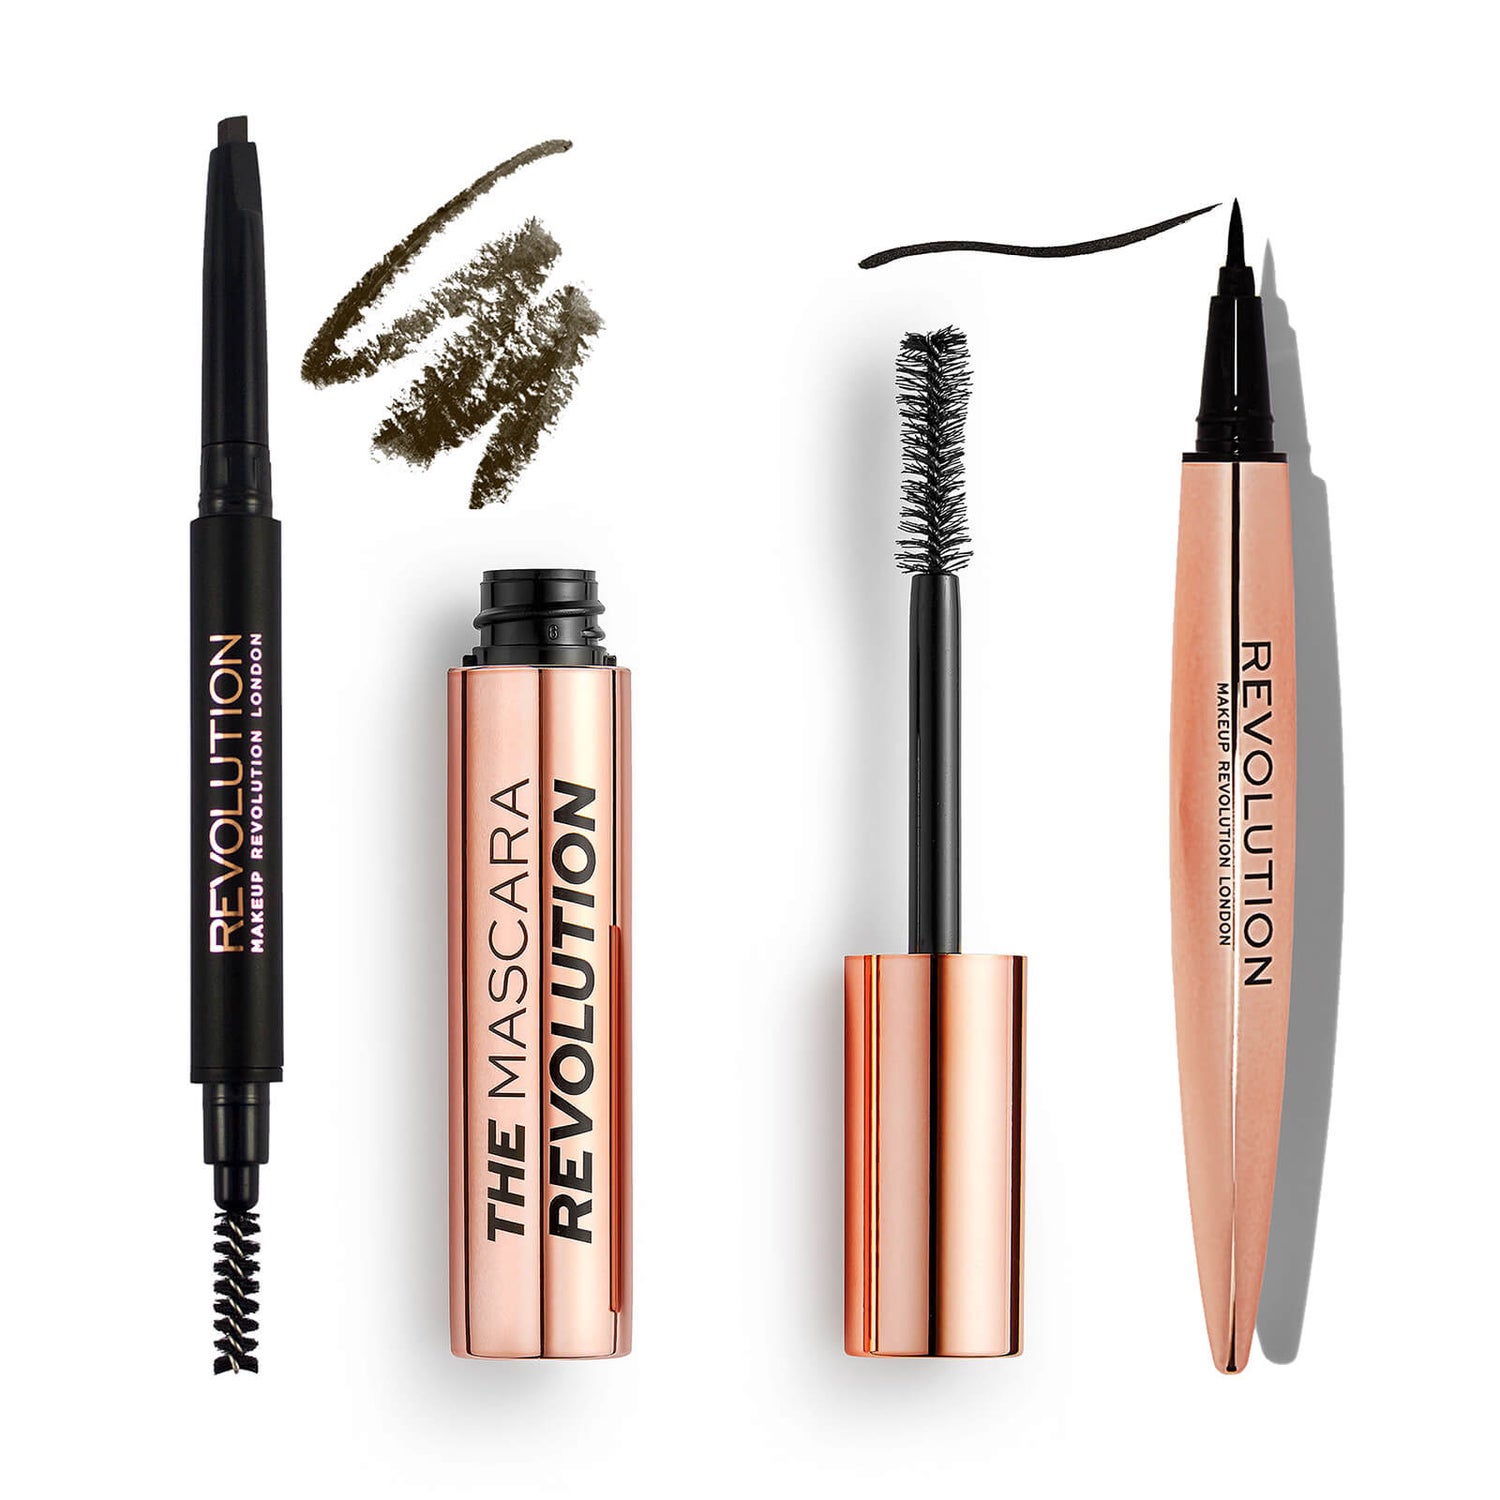 Revolution Mascara + Brow Pencil/Gel + Eyeliner